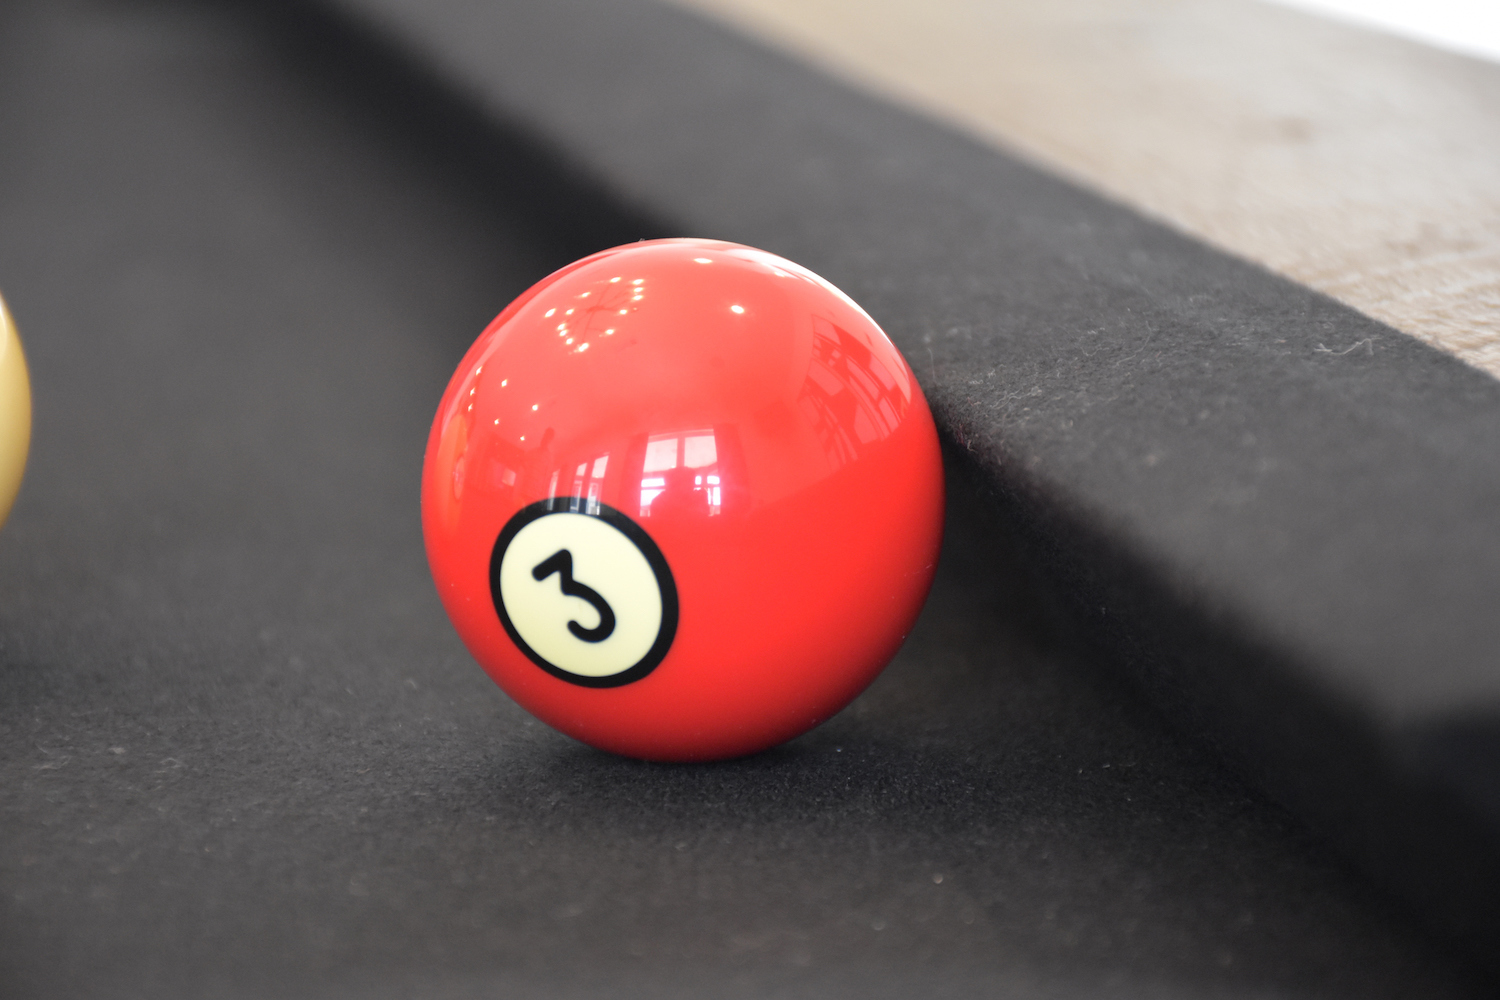 Black billiard table, Billiard balls in a pool table, focused on 3 ball